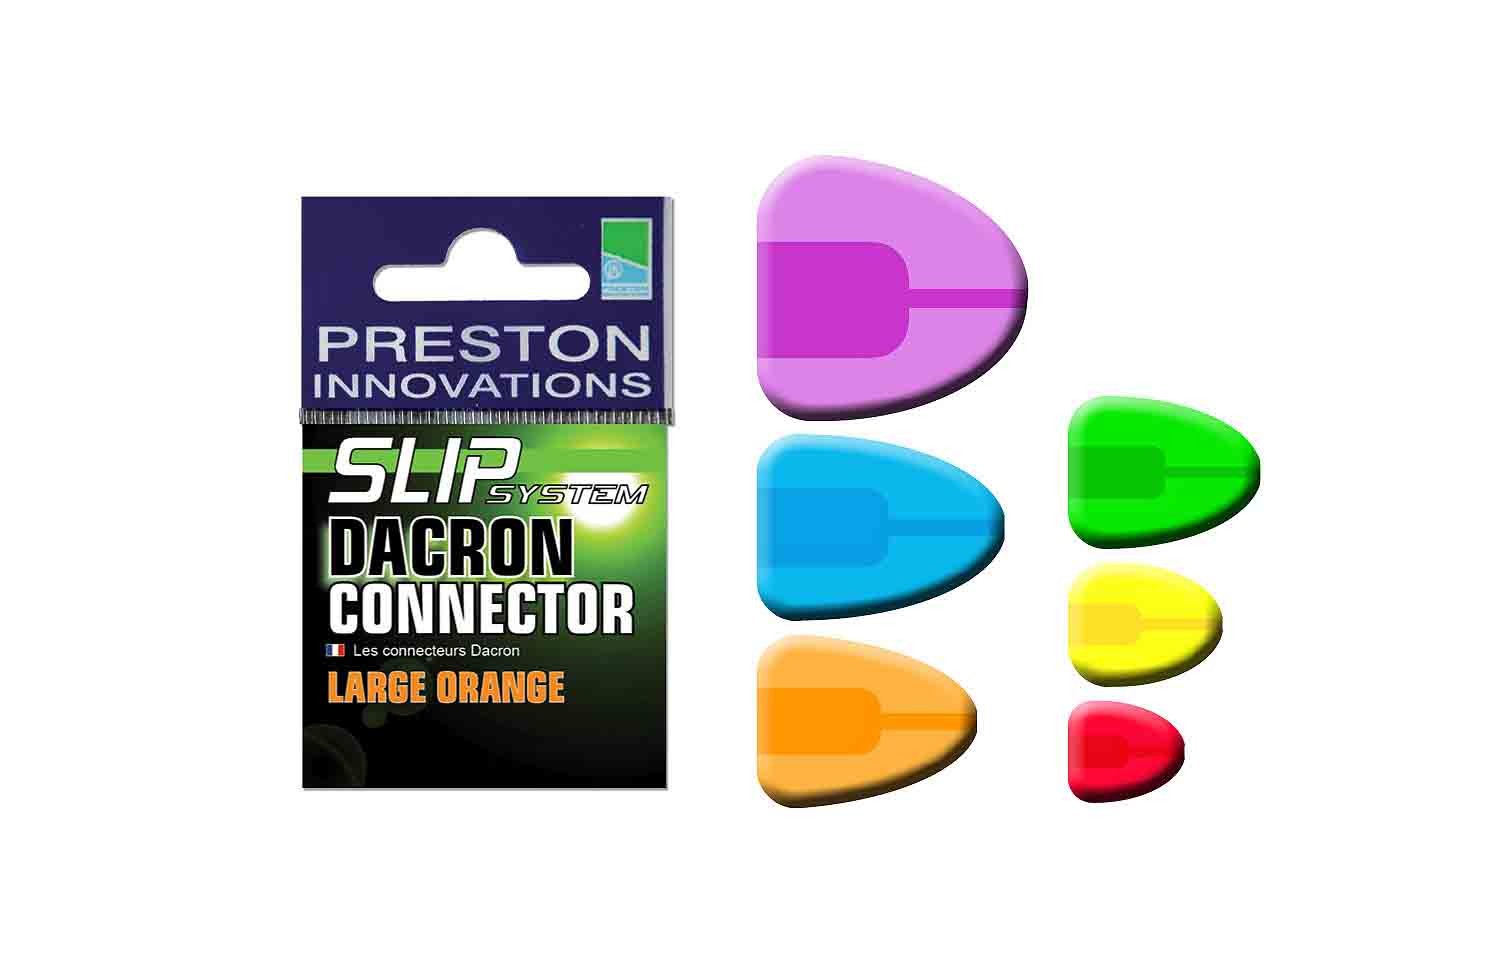 Preston Mega Purple Dacron Connector